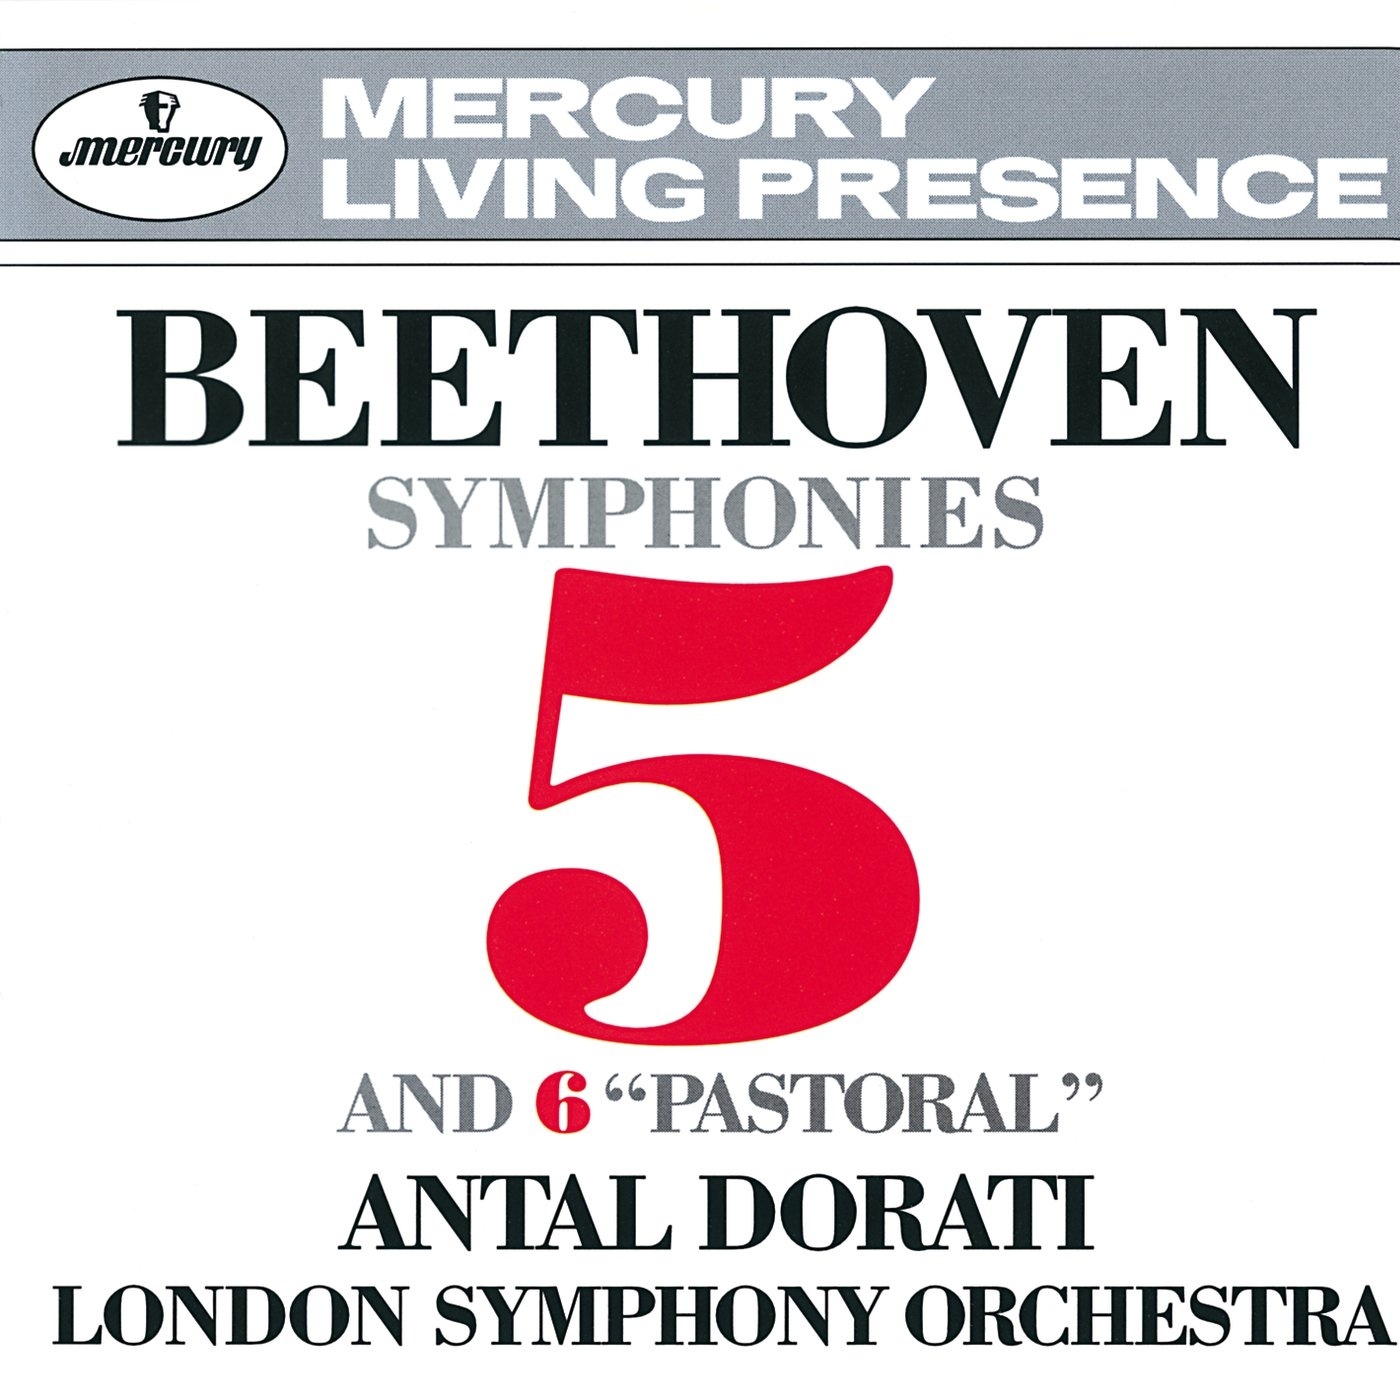 Beethoven Symphonies 5 & 6